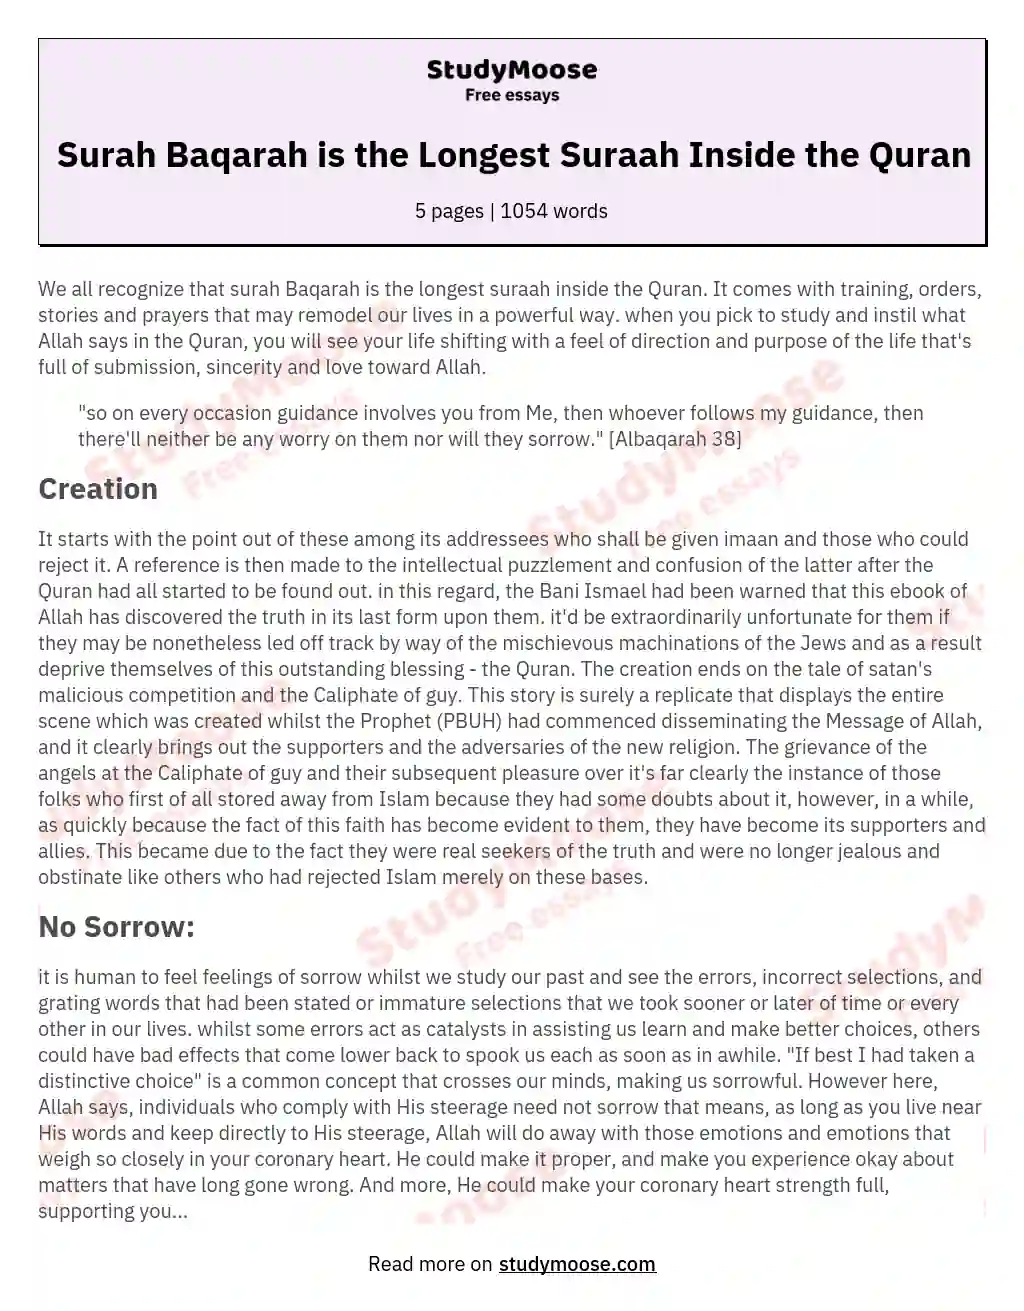 Surah Baqarah is the Longest Suraah Inside the Quran essay